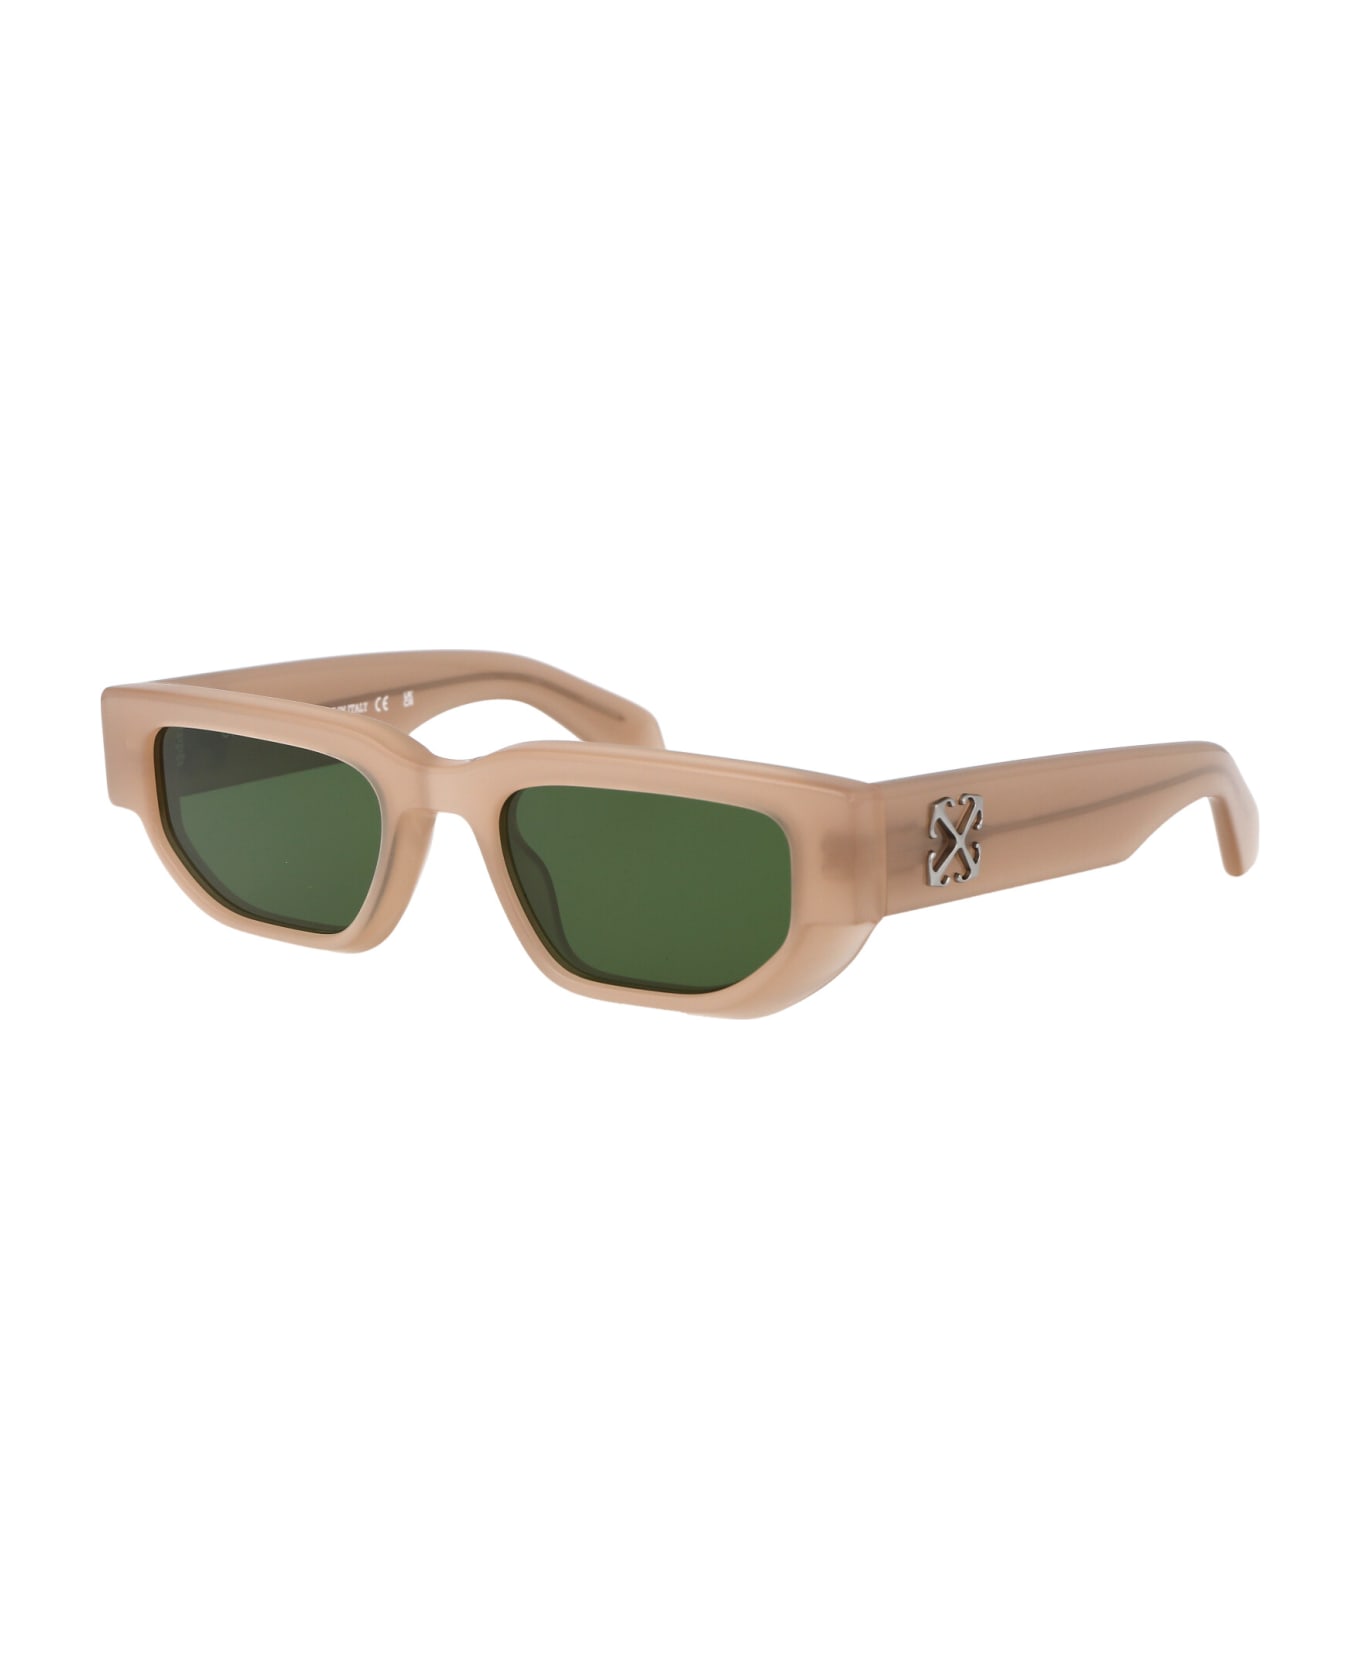 Off-White Greeley Sunglasses - 1755 SAND 